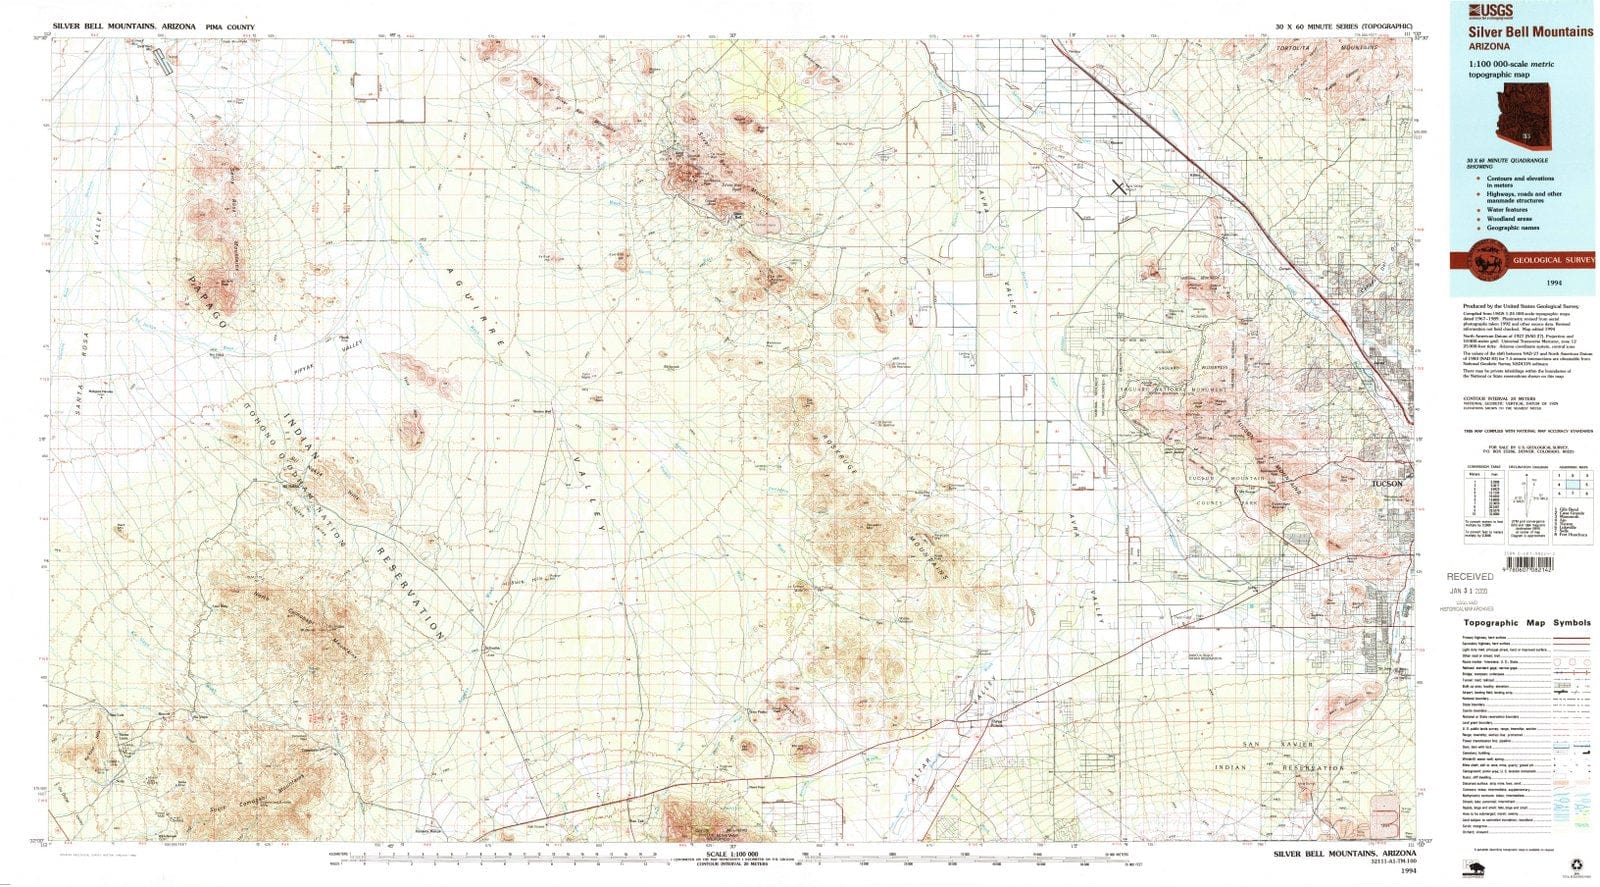 1994 Silver Bell Mountain, AZ - Arizona - USGS Topographic Map